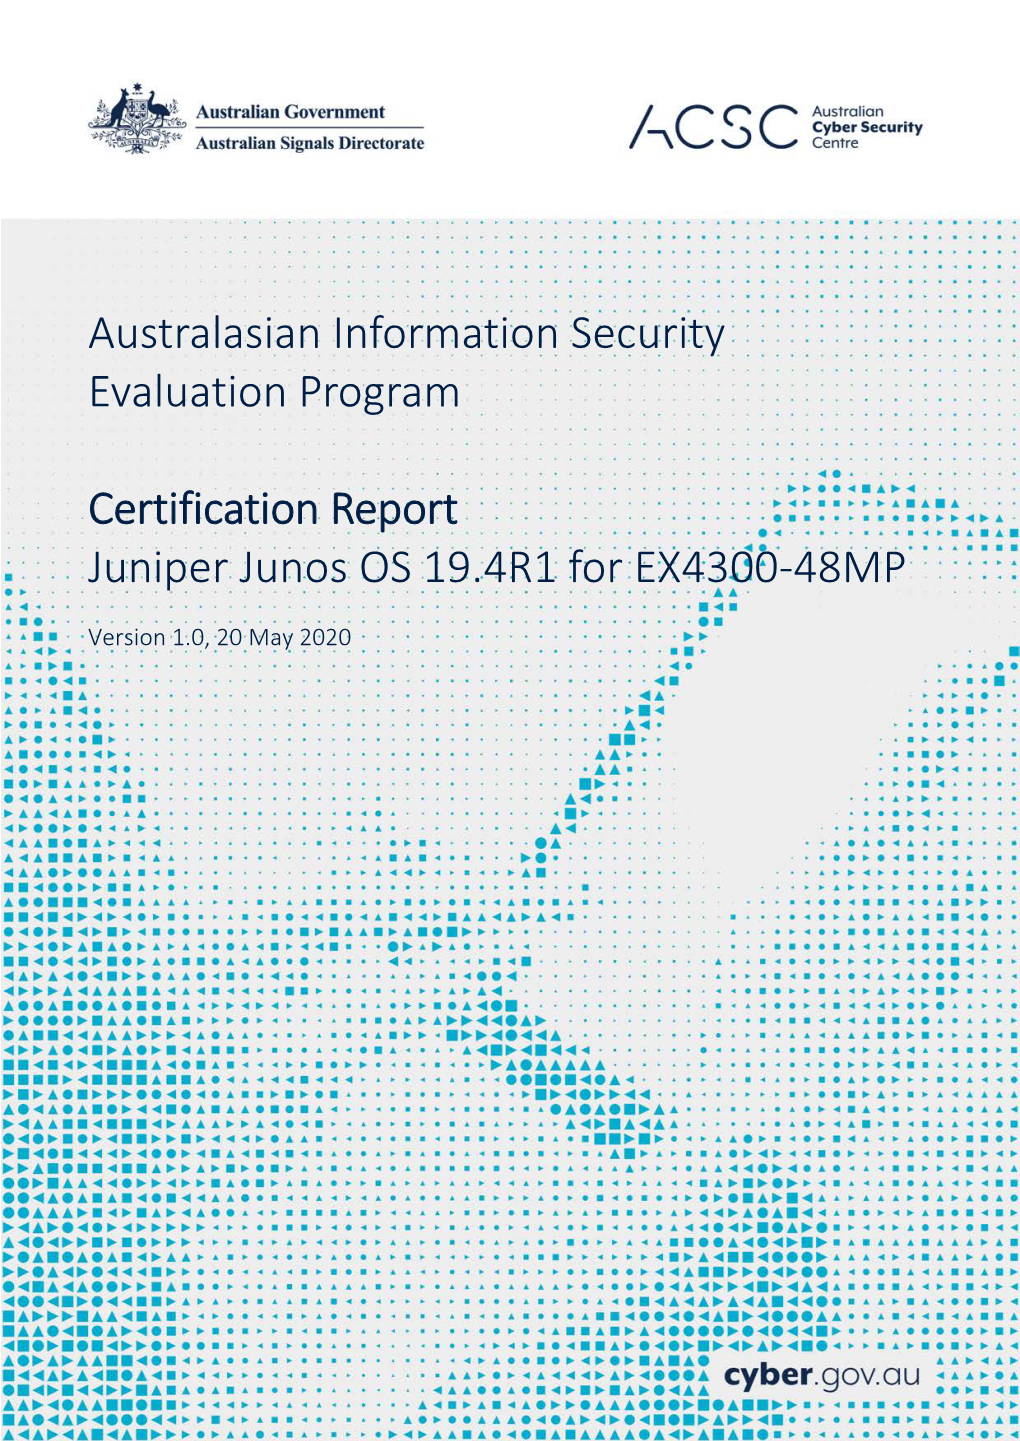 Australasian Information Security Evaluation Program Certification